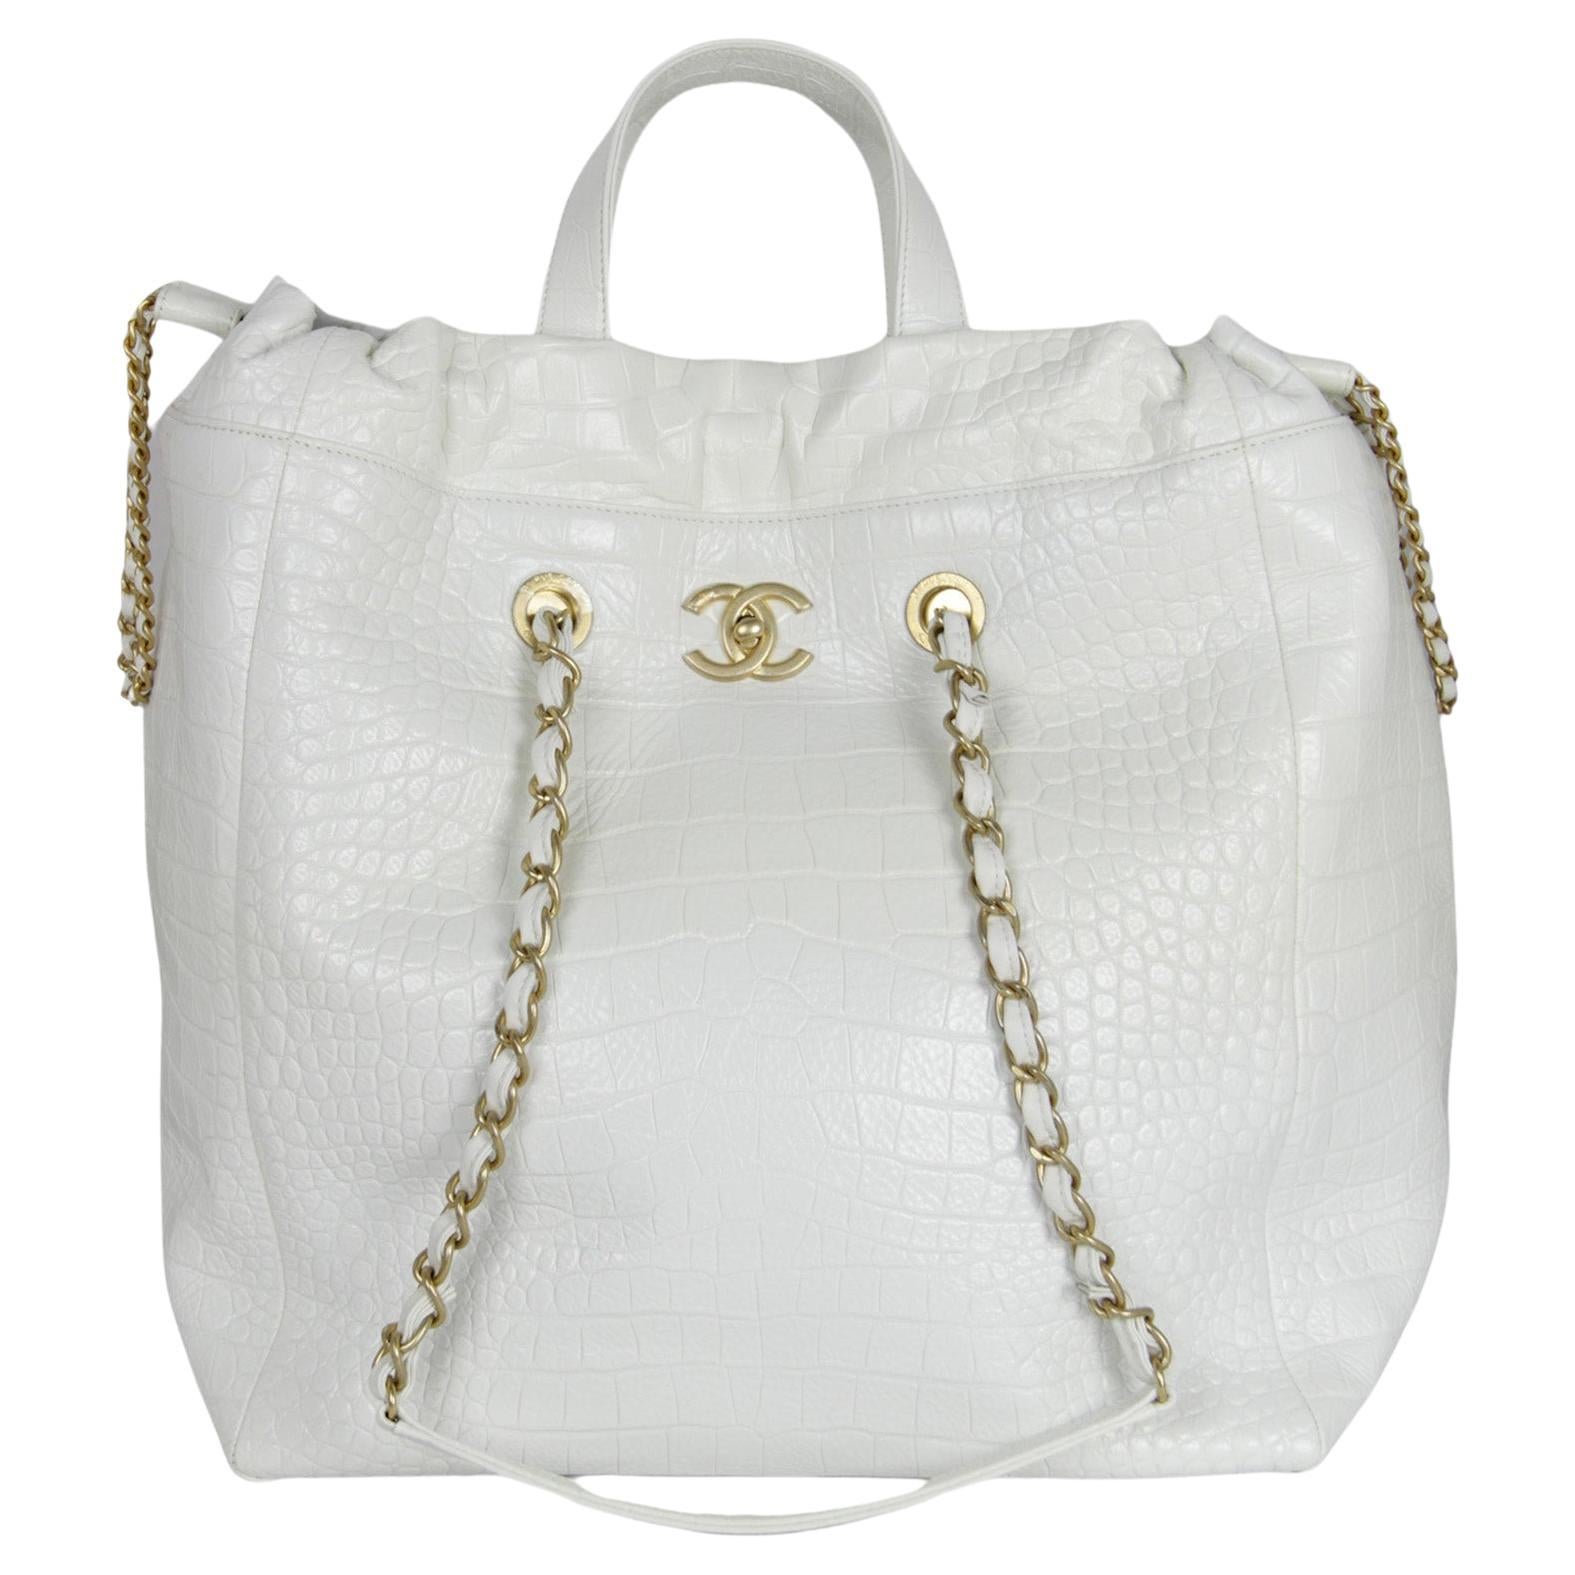 Chanel Paris-New York grand sac fourre-tout Coco en crocodile embossé blanc